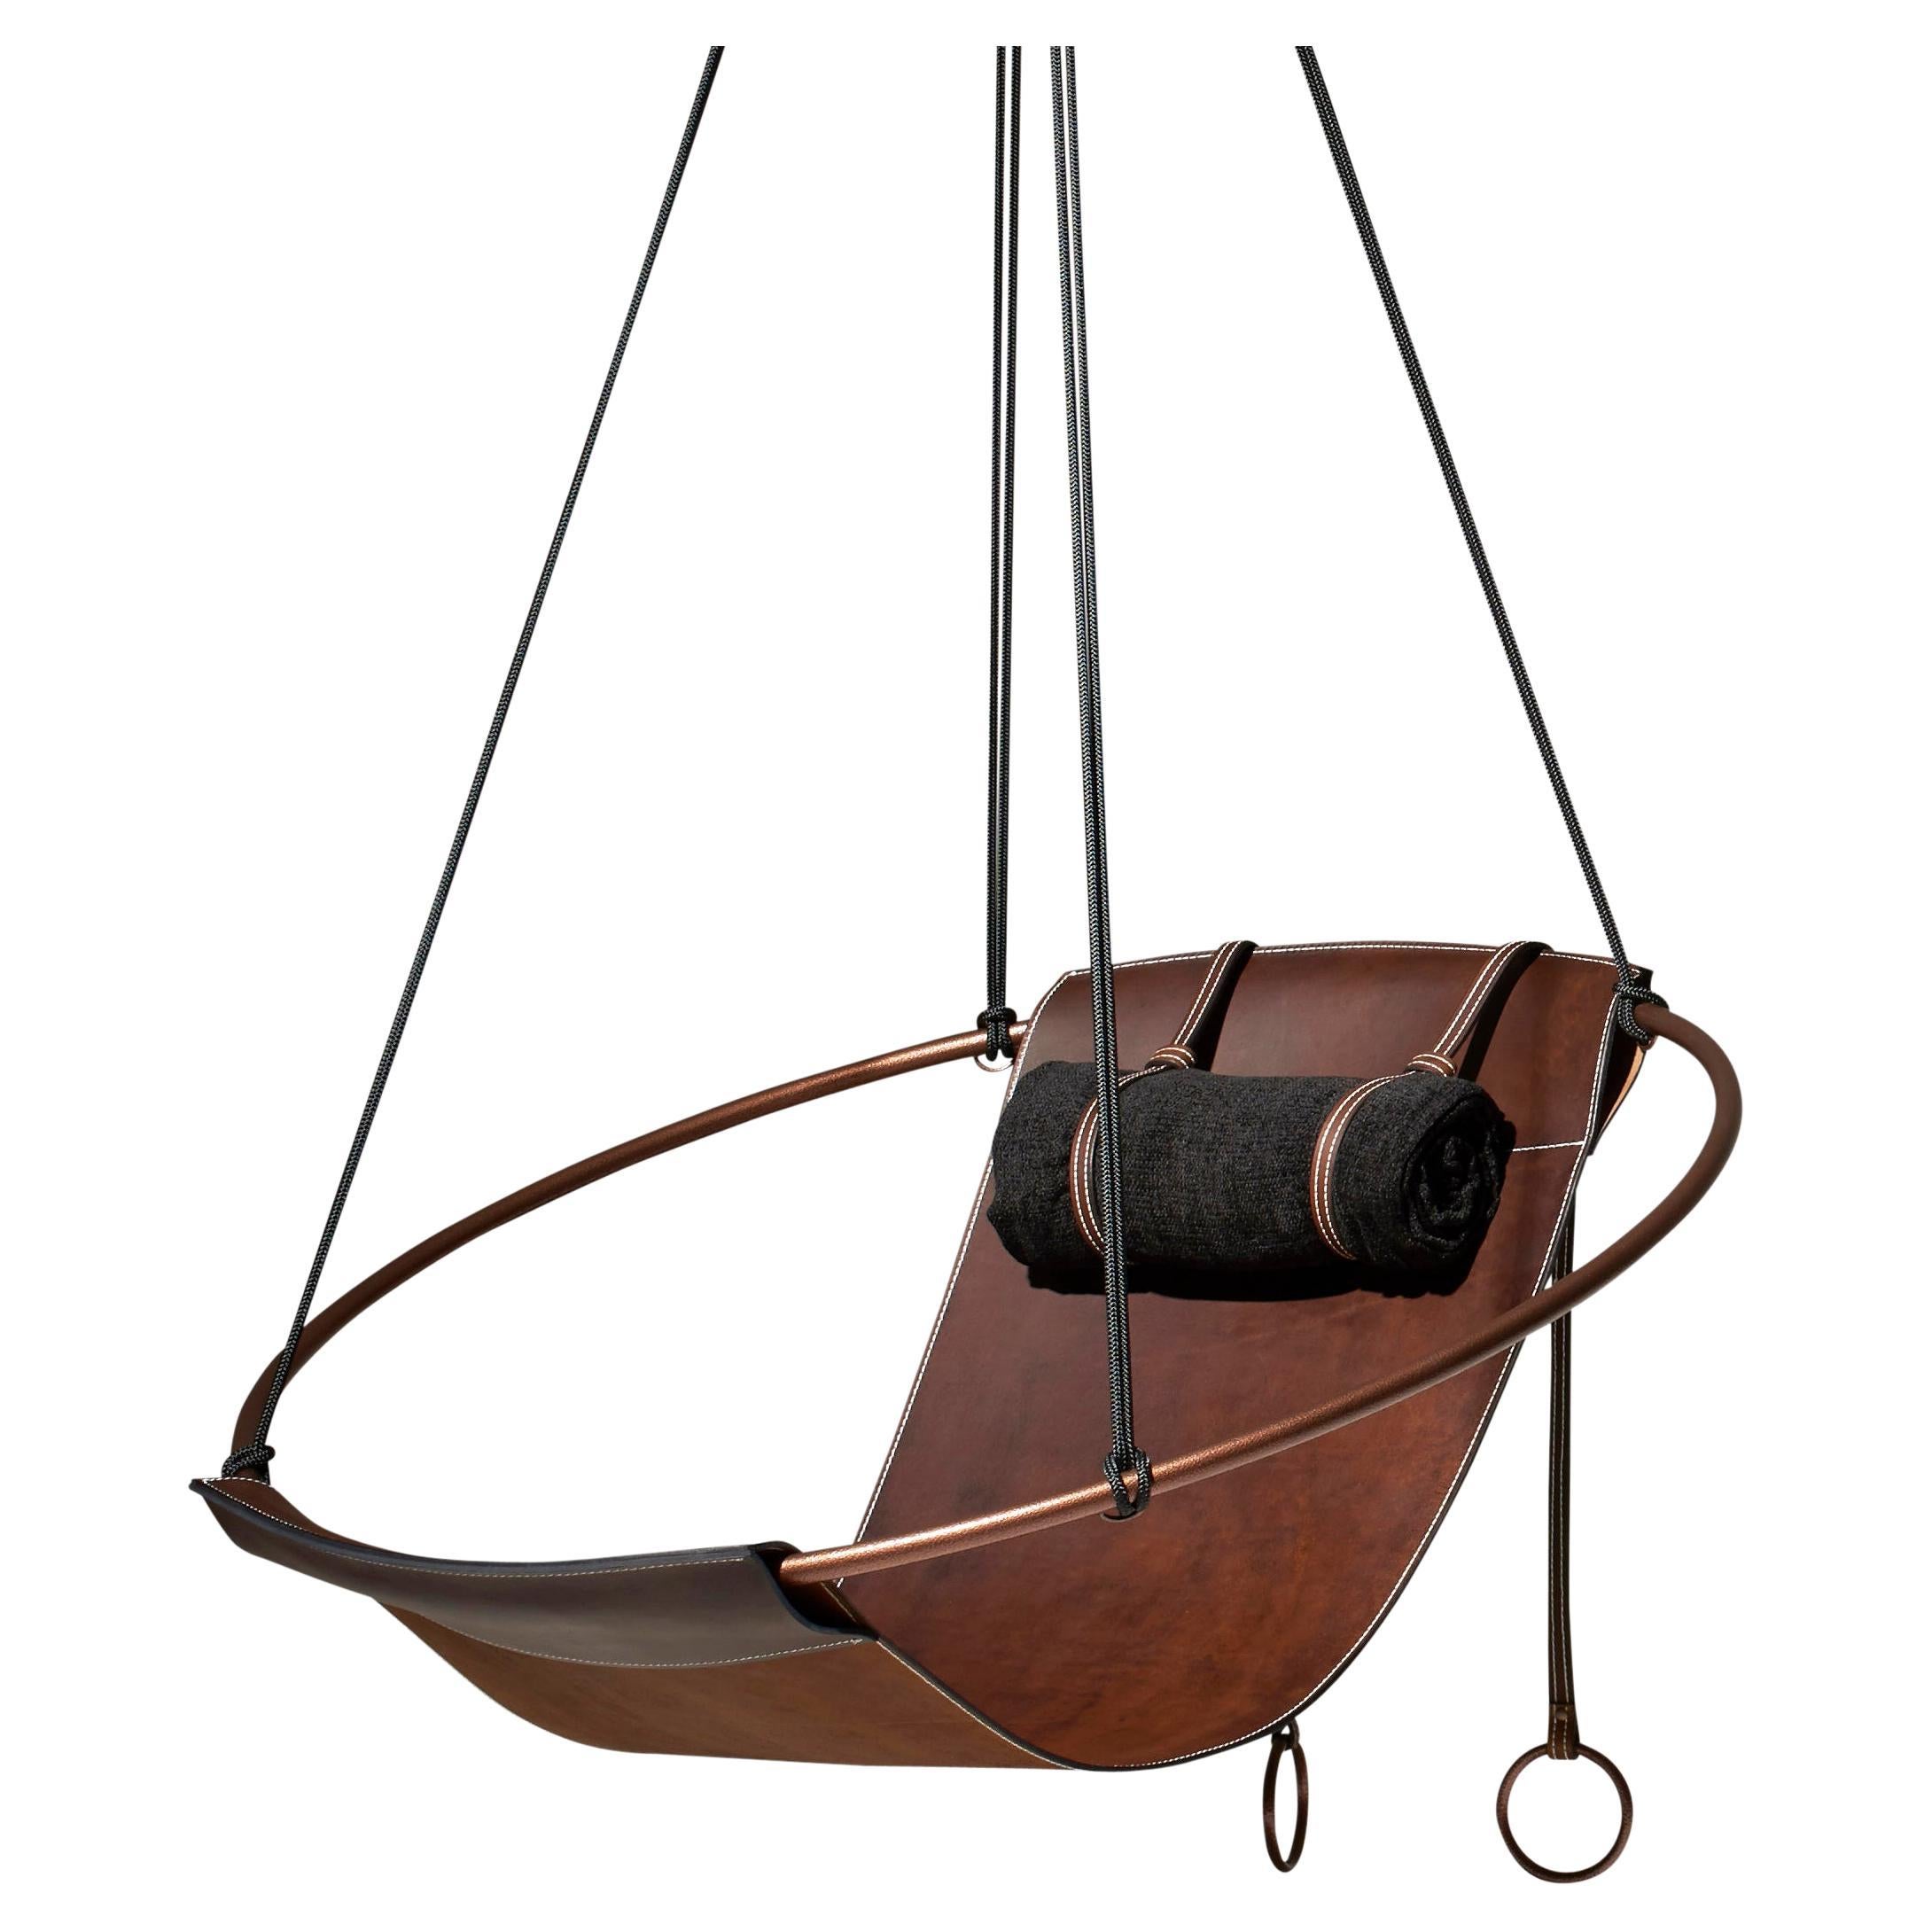 Moderner, rustikaler afrikanischer hängender Sling Swing Chair aus Leder